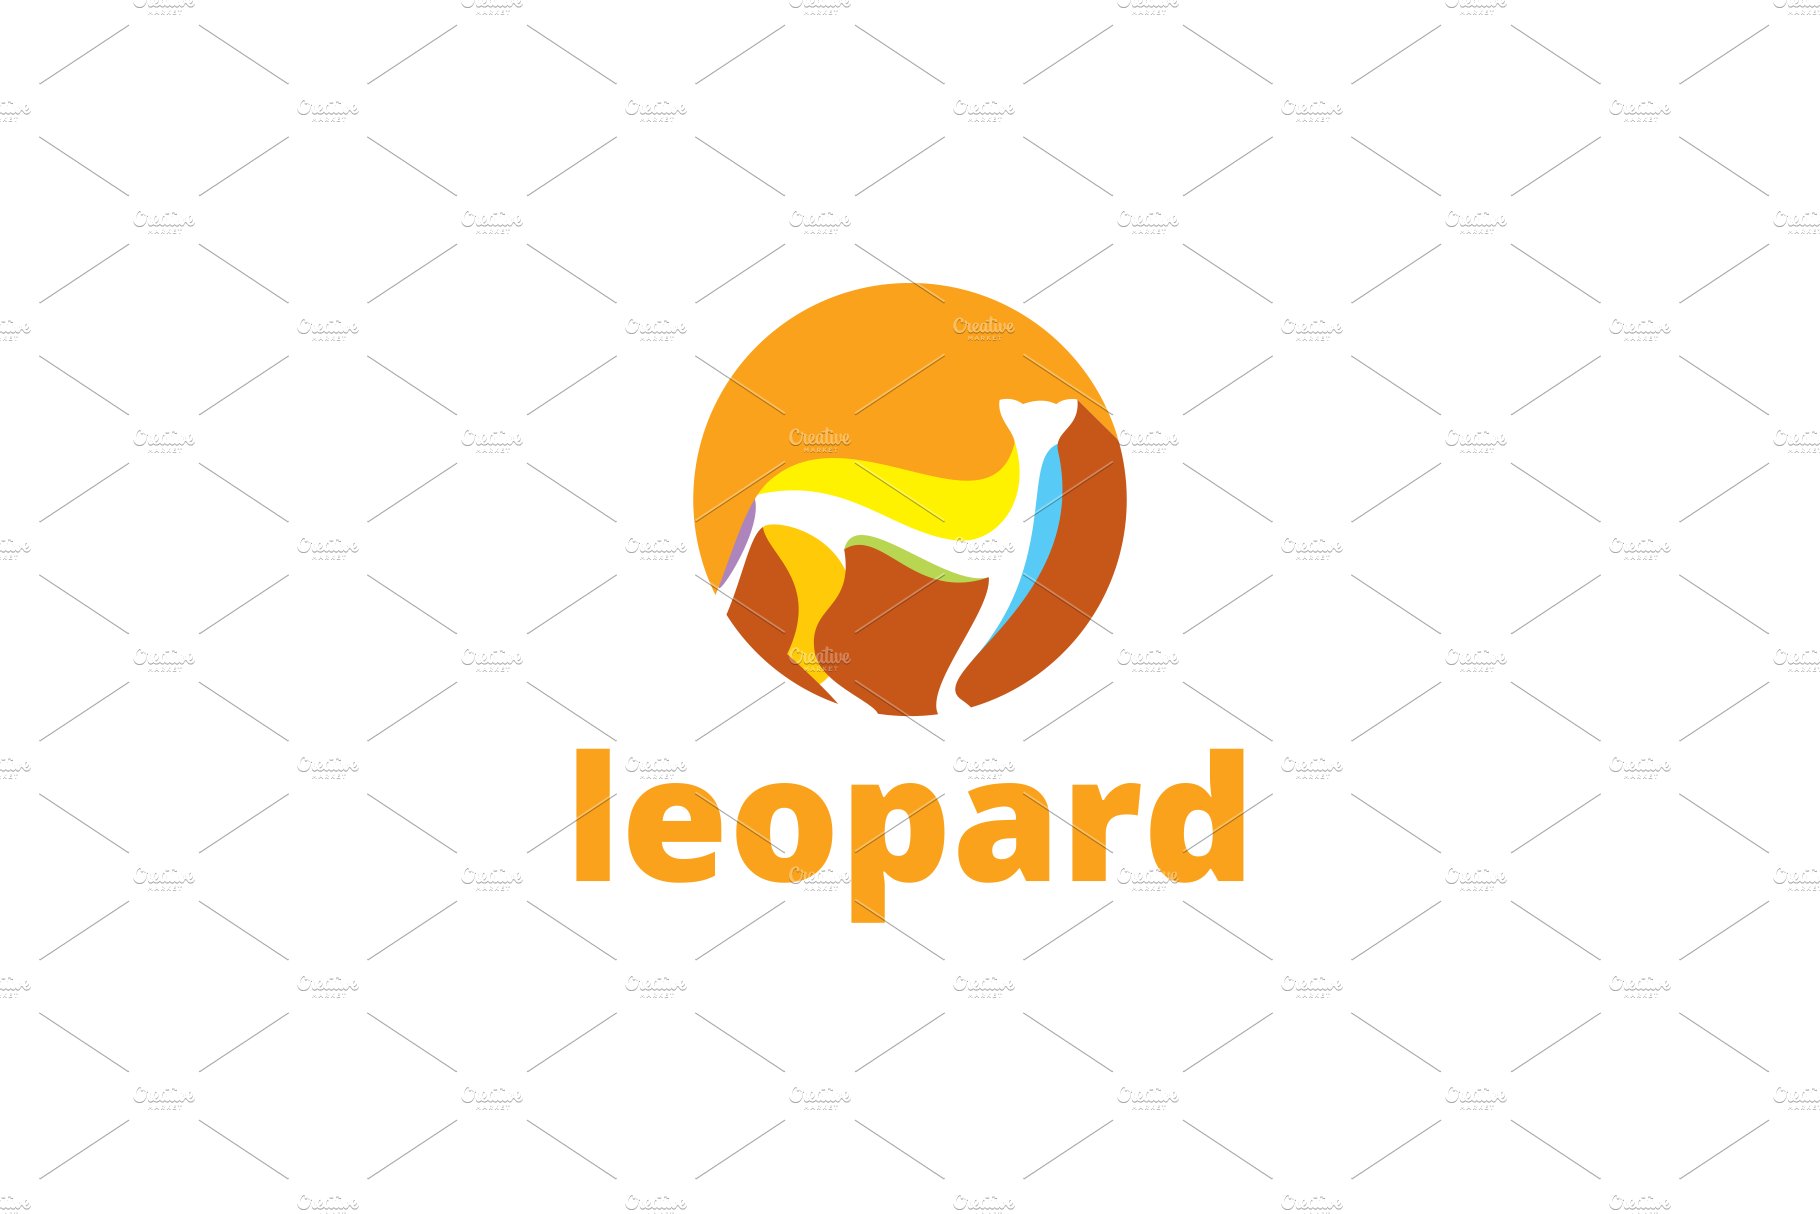 Leopard Logo cover image.